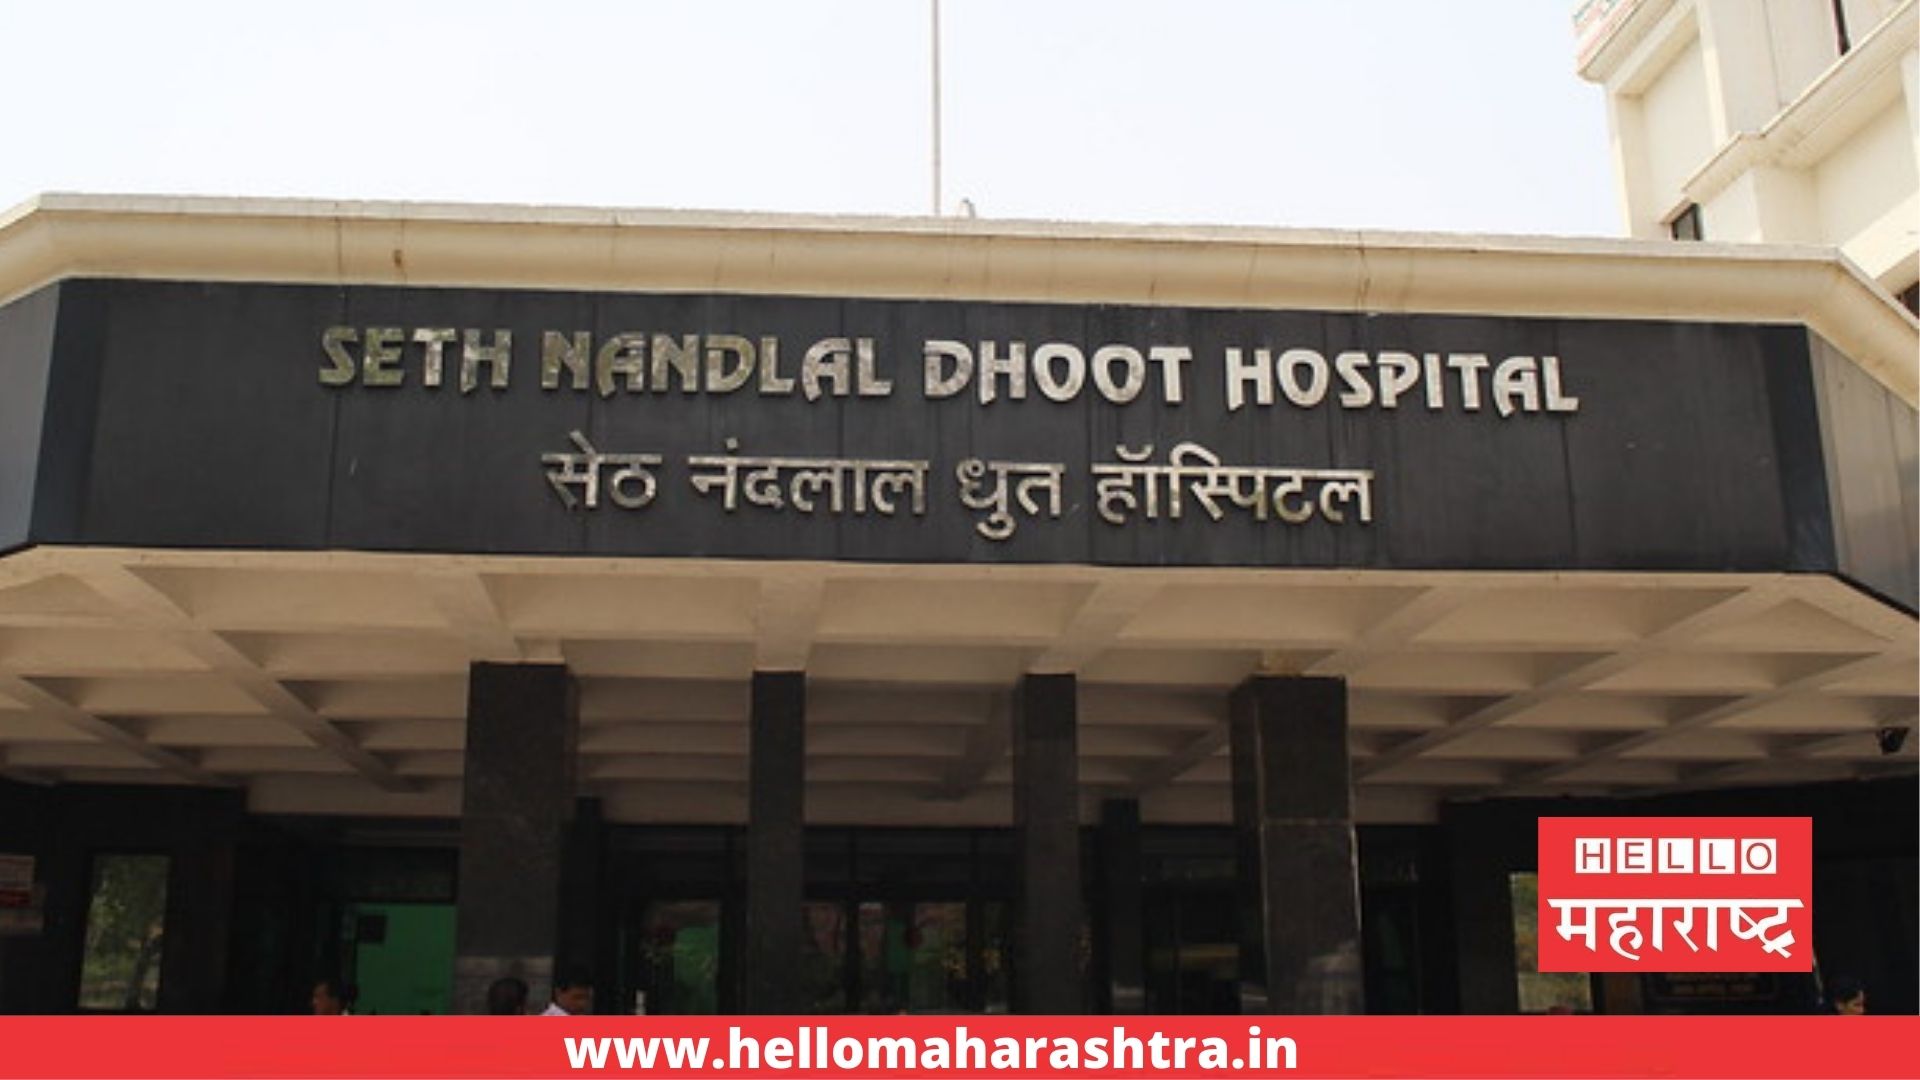 Dhoot Hospital